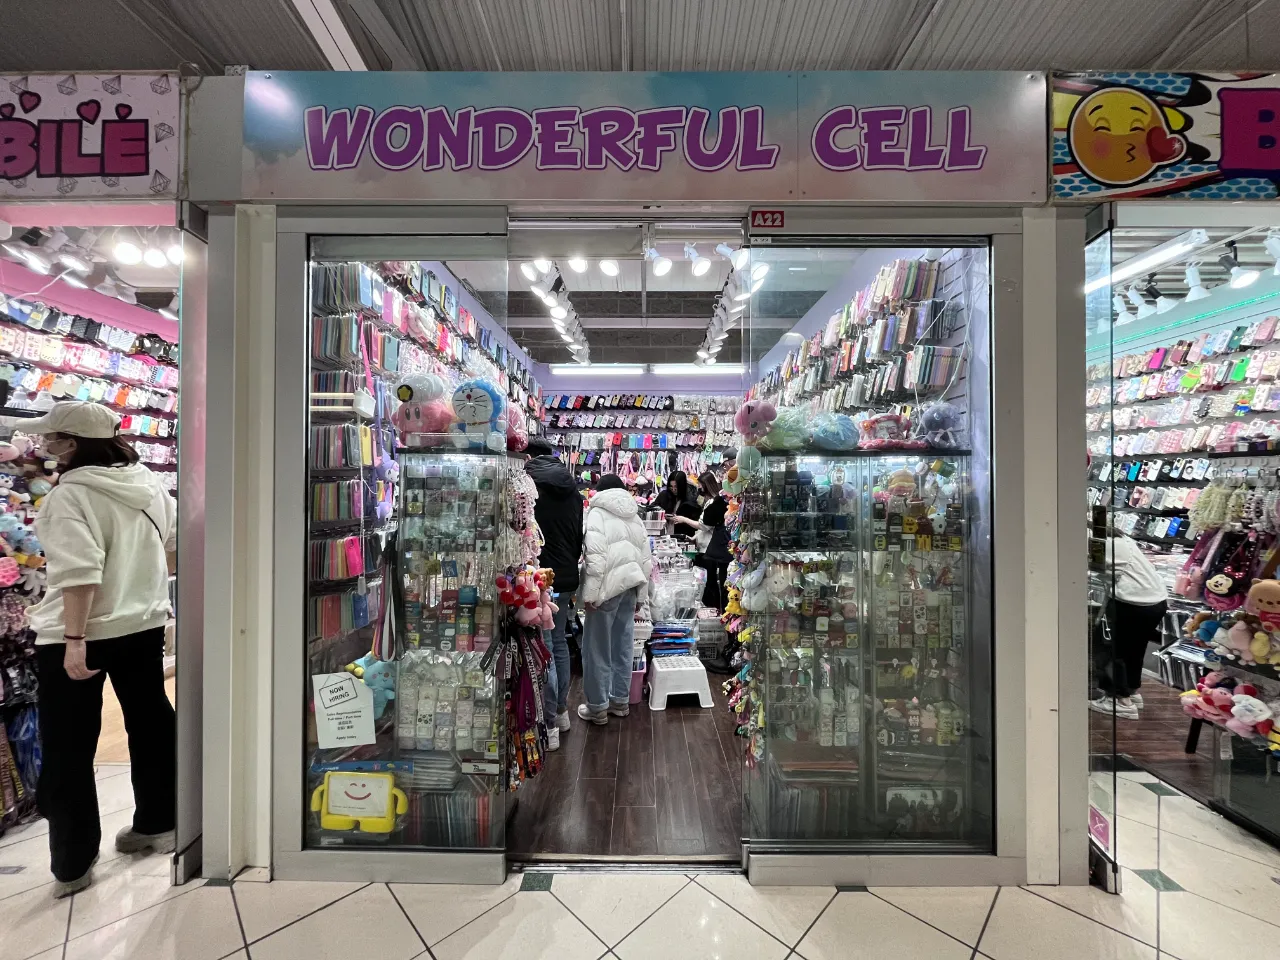 Wonderful Cell